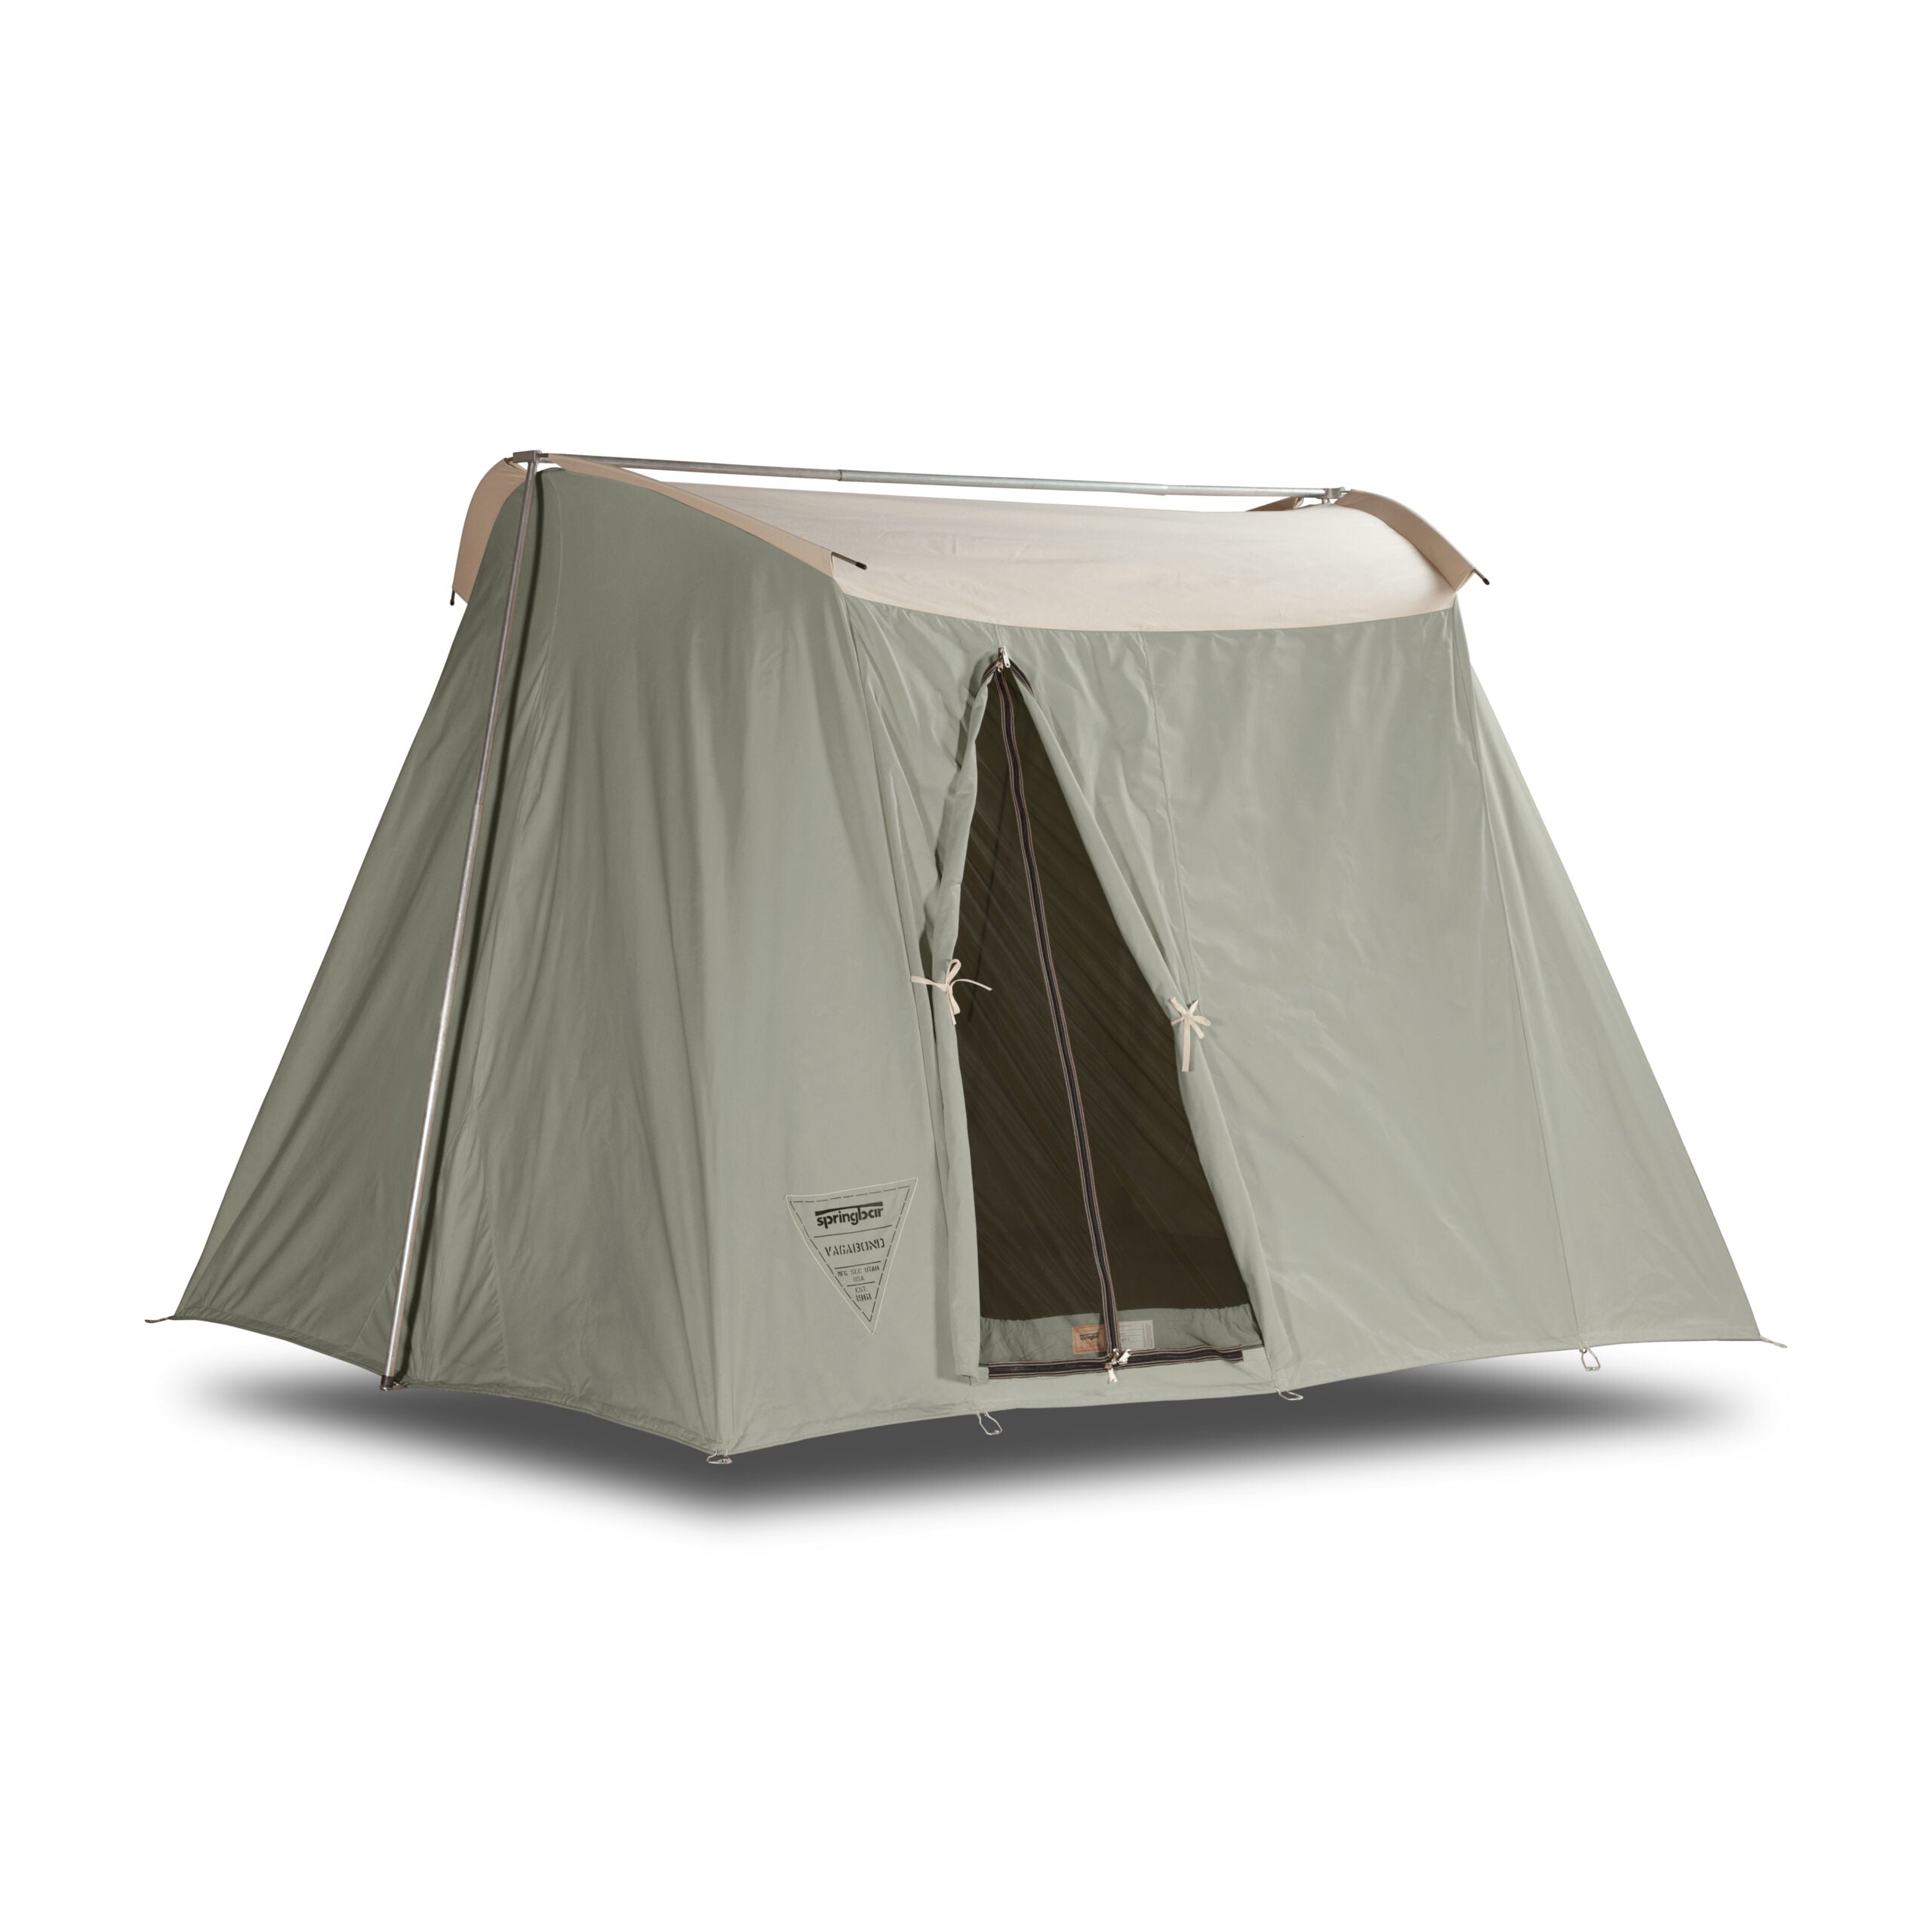 Fun Camping, Custom Colors, Tent Camp Site Supplies, Campfire